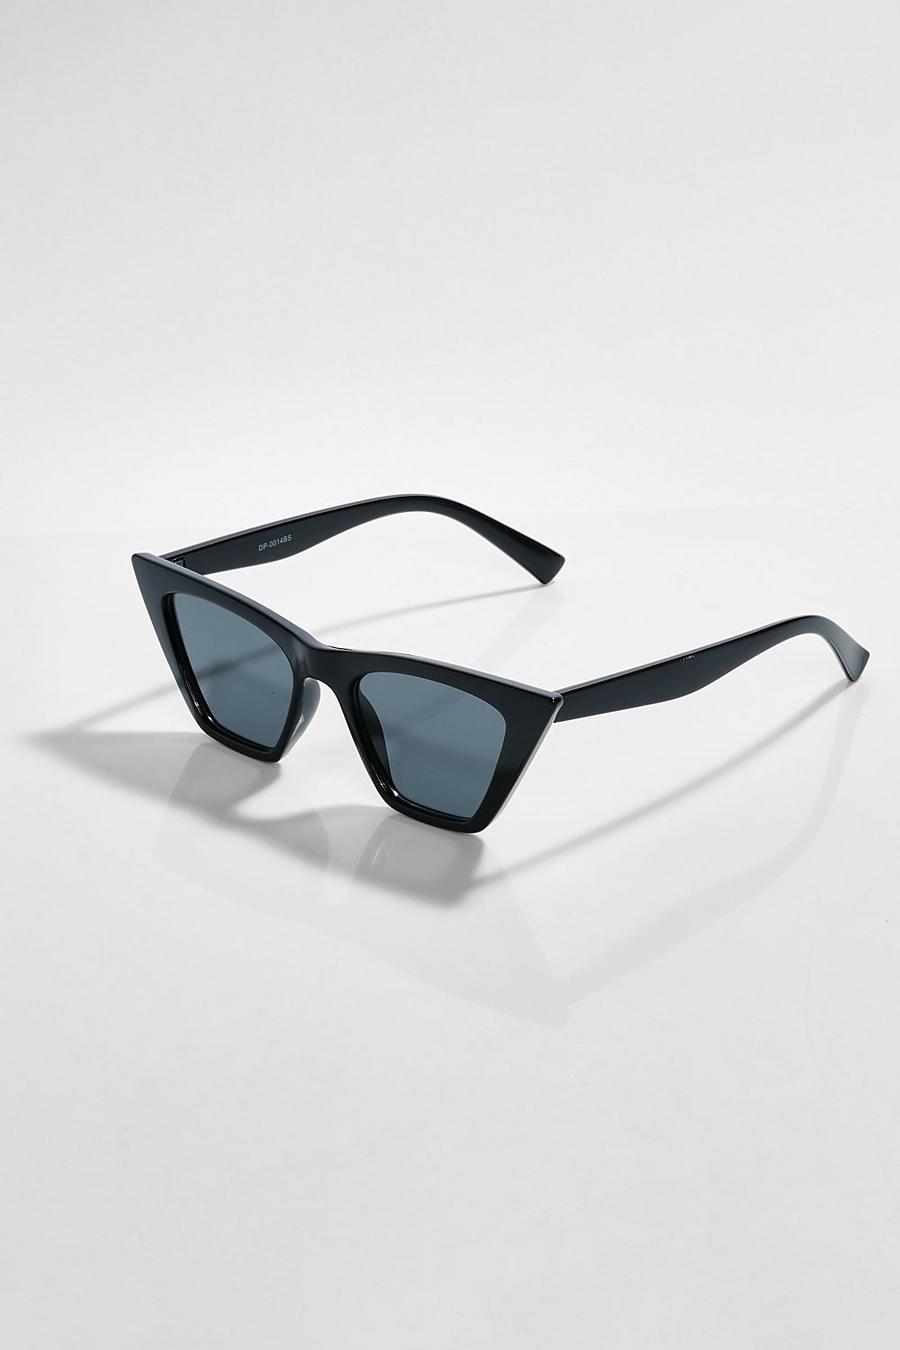 Gafas de sol oversize estilo ojo de gato de carey, Black negro